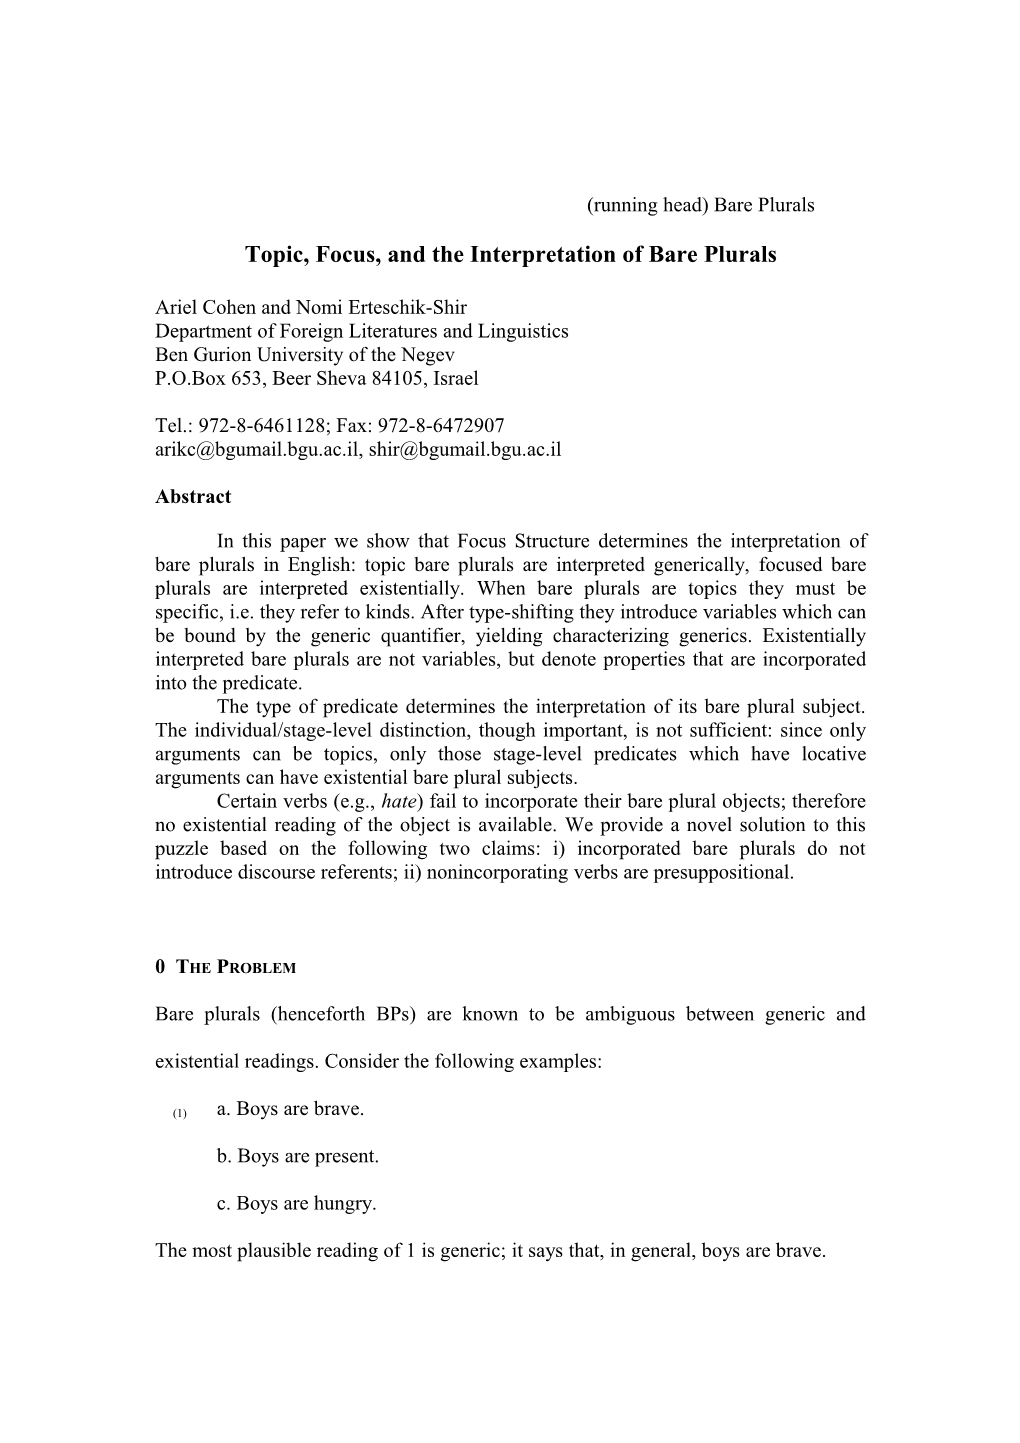 Topic, Focus, and the Interpretation of Bare Plurals